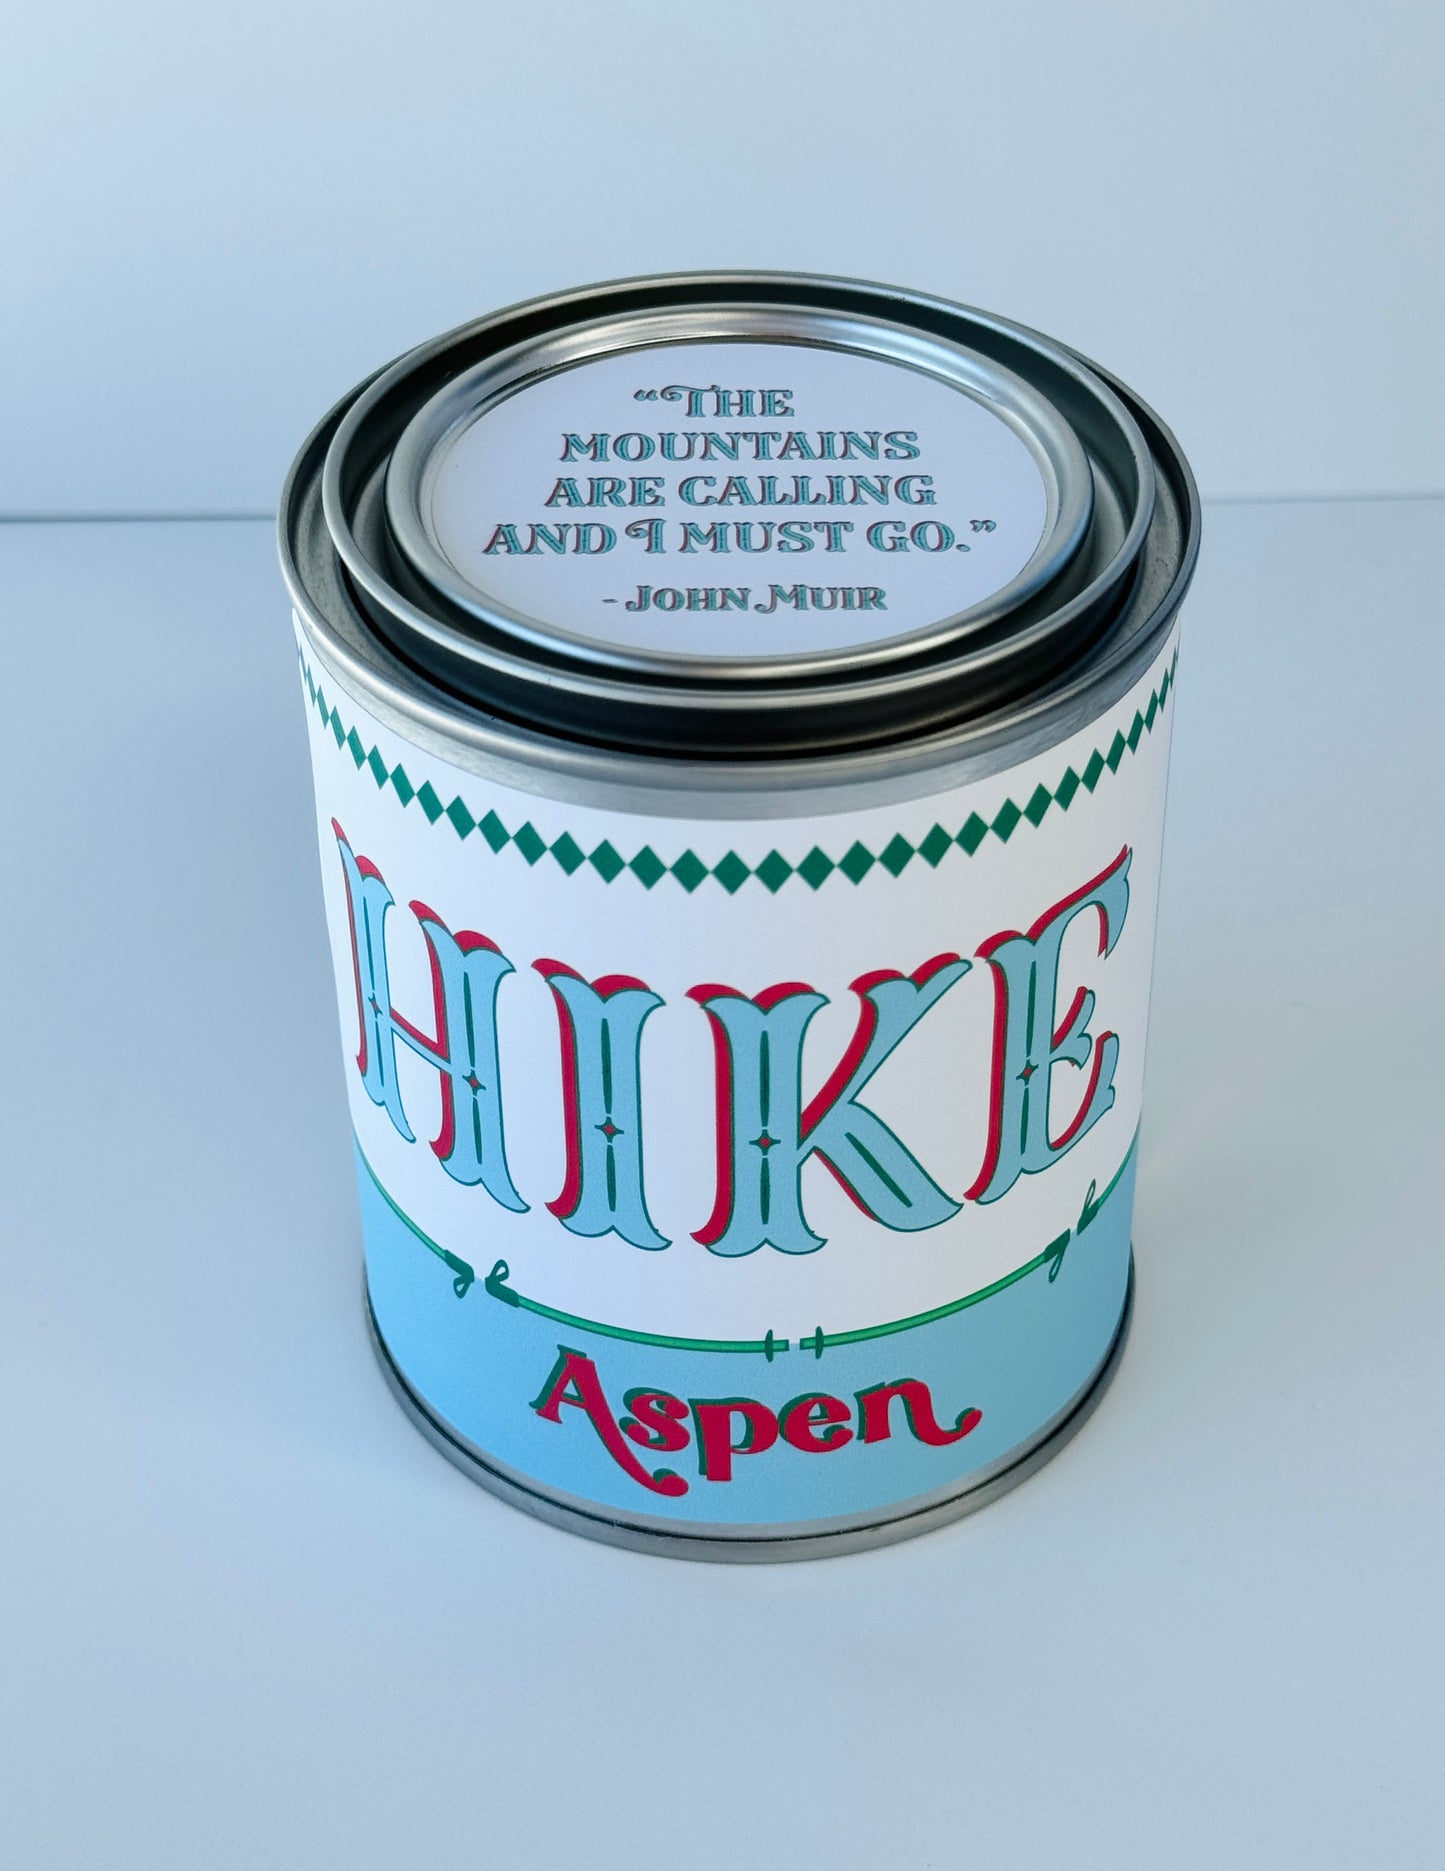 Hike Aspen - Paint Tin Candle